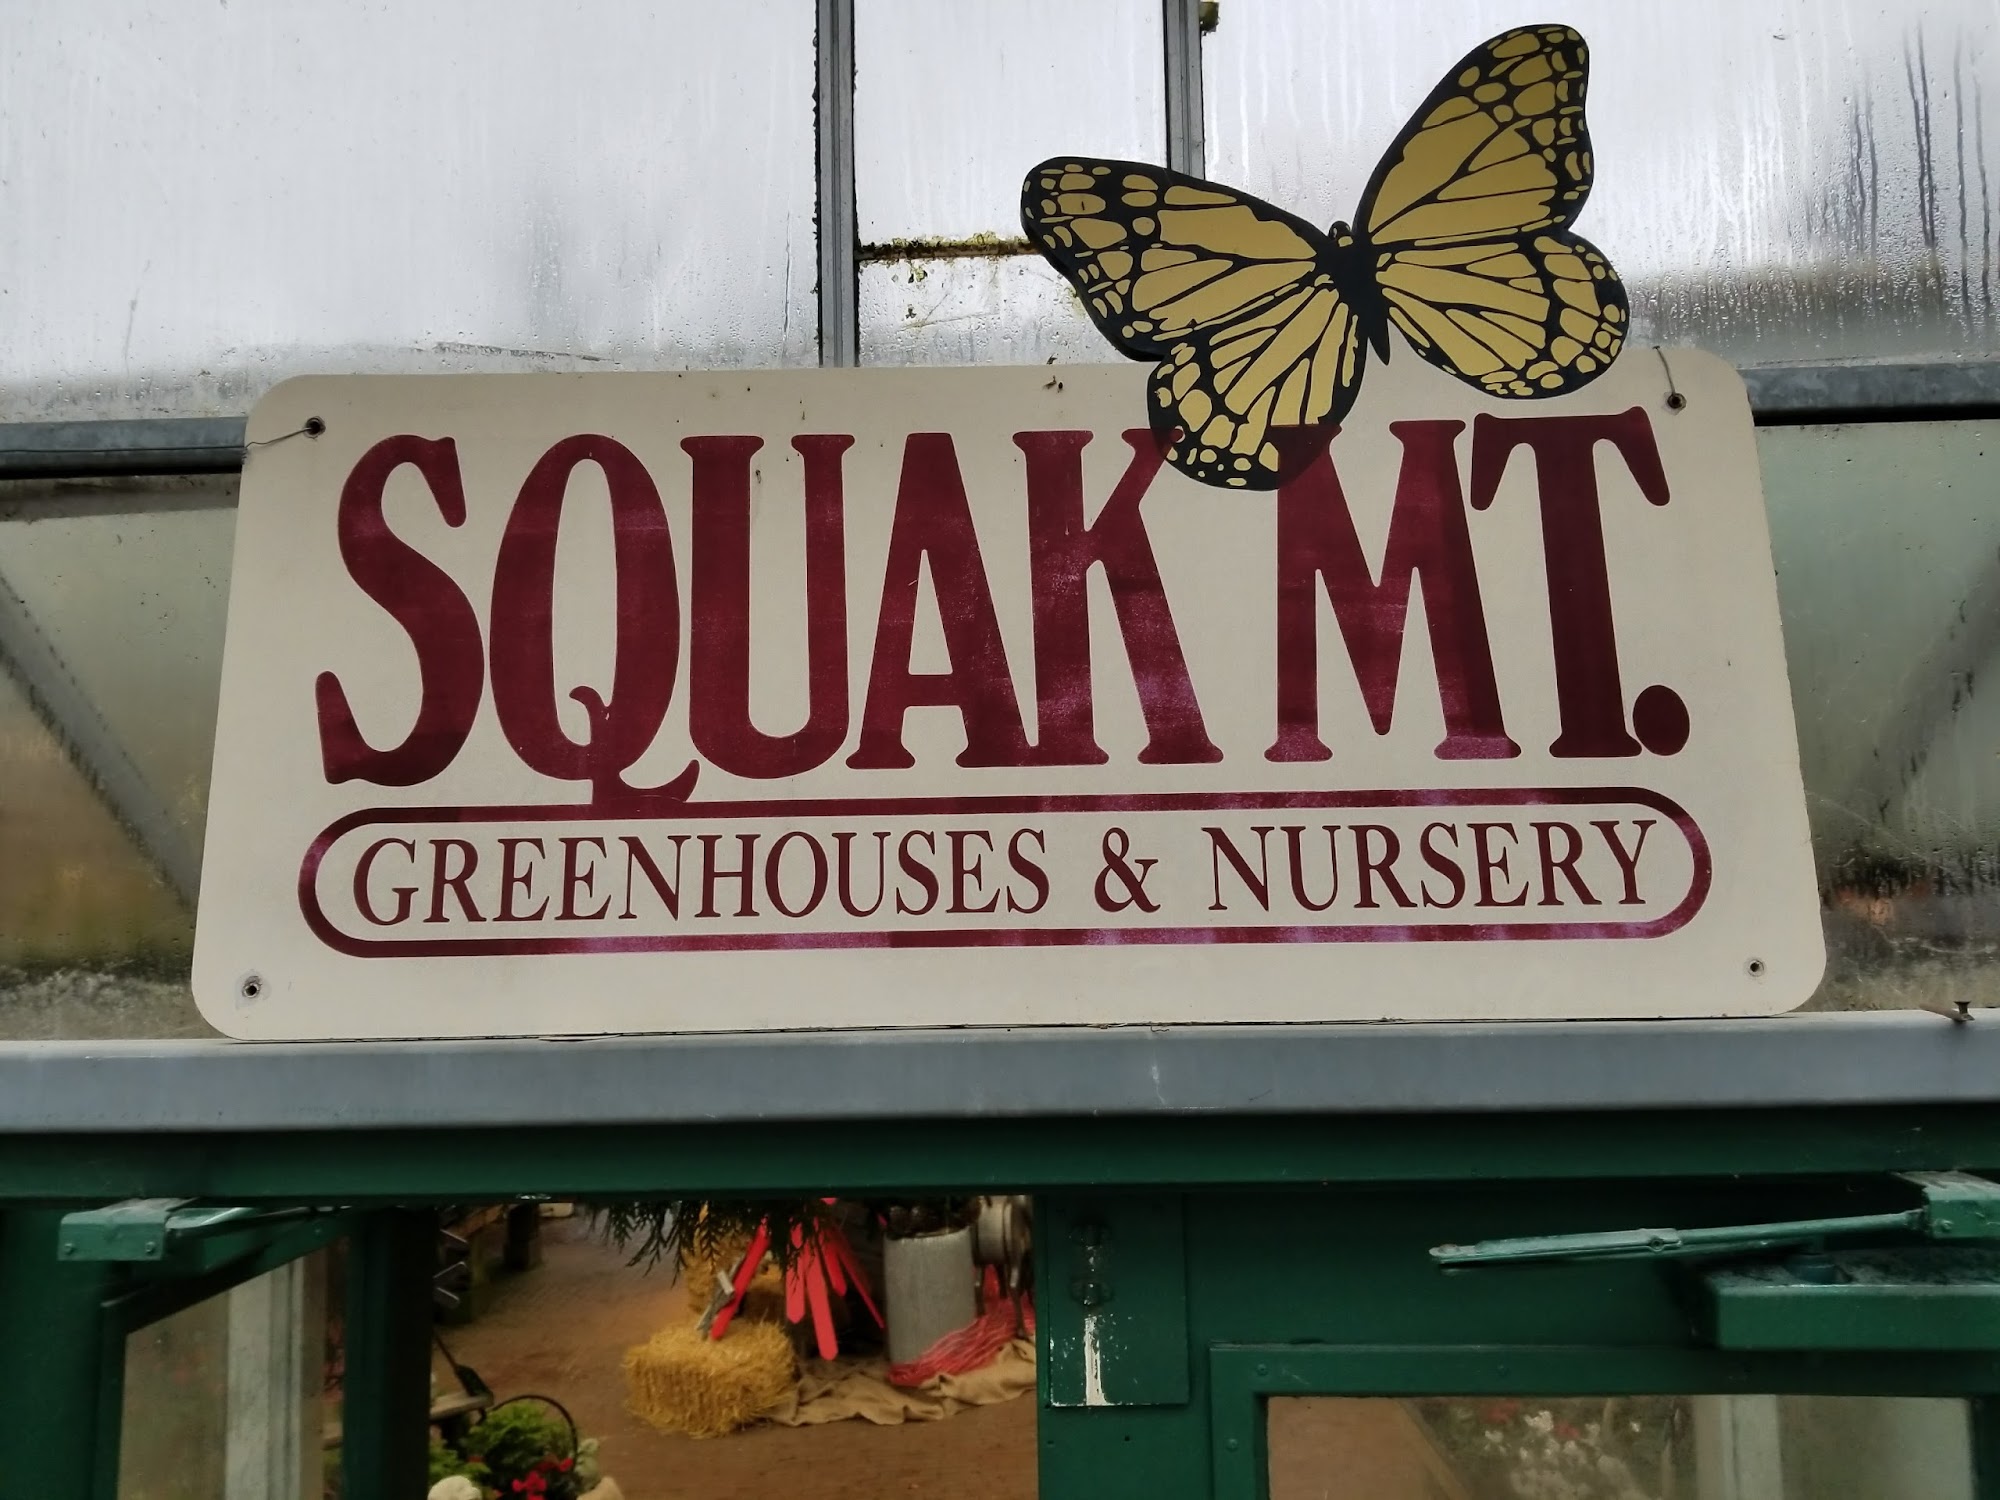 Squak Mt Greenhouses & Nursery